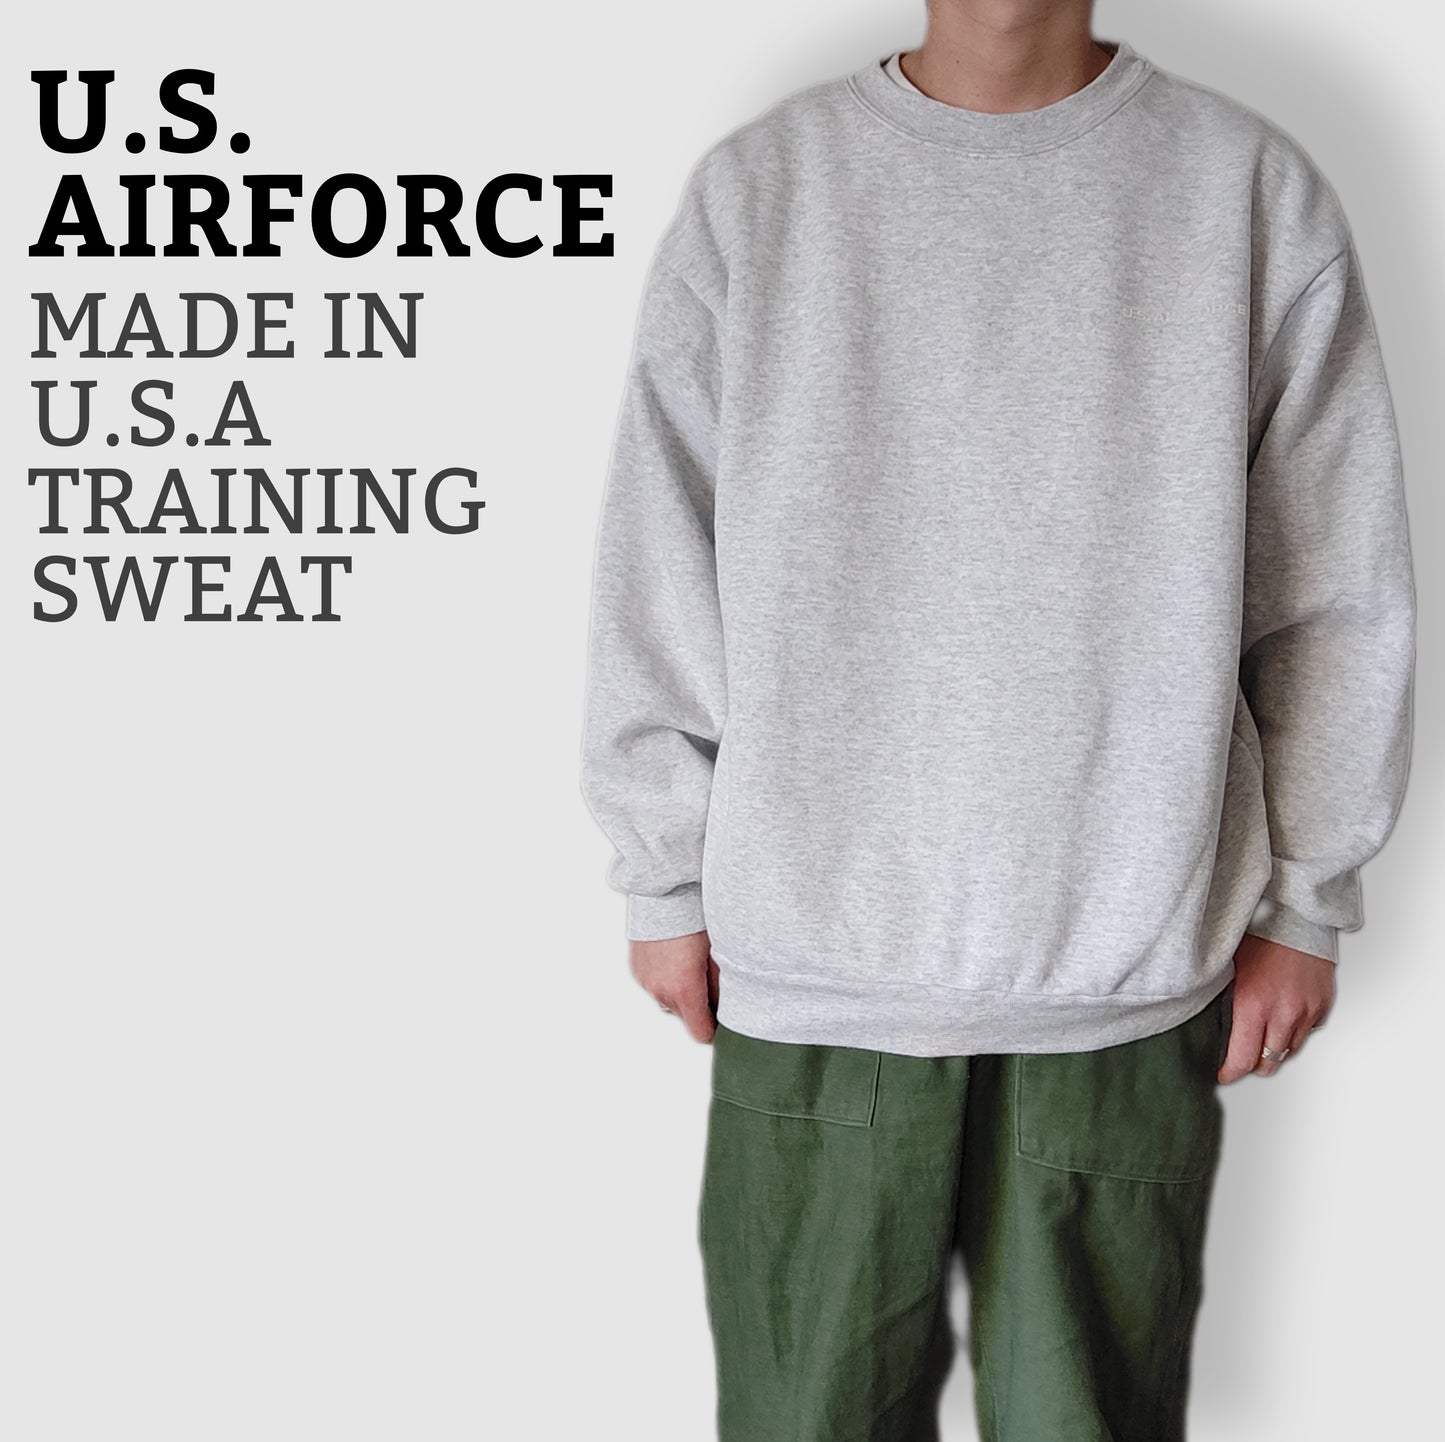 [U.S.AIRFORCE] traning sweat, made in U.S.A